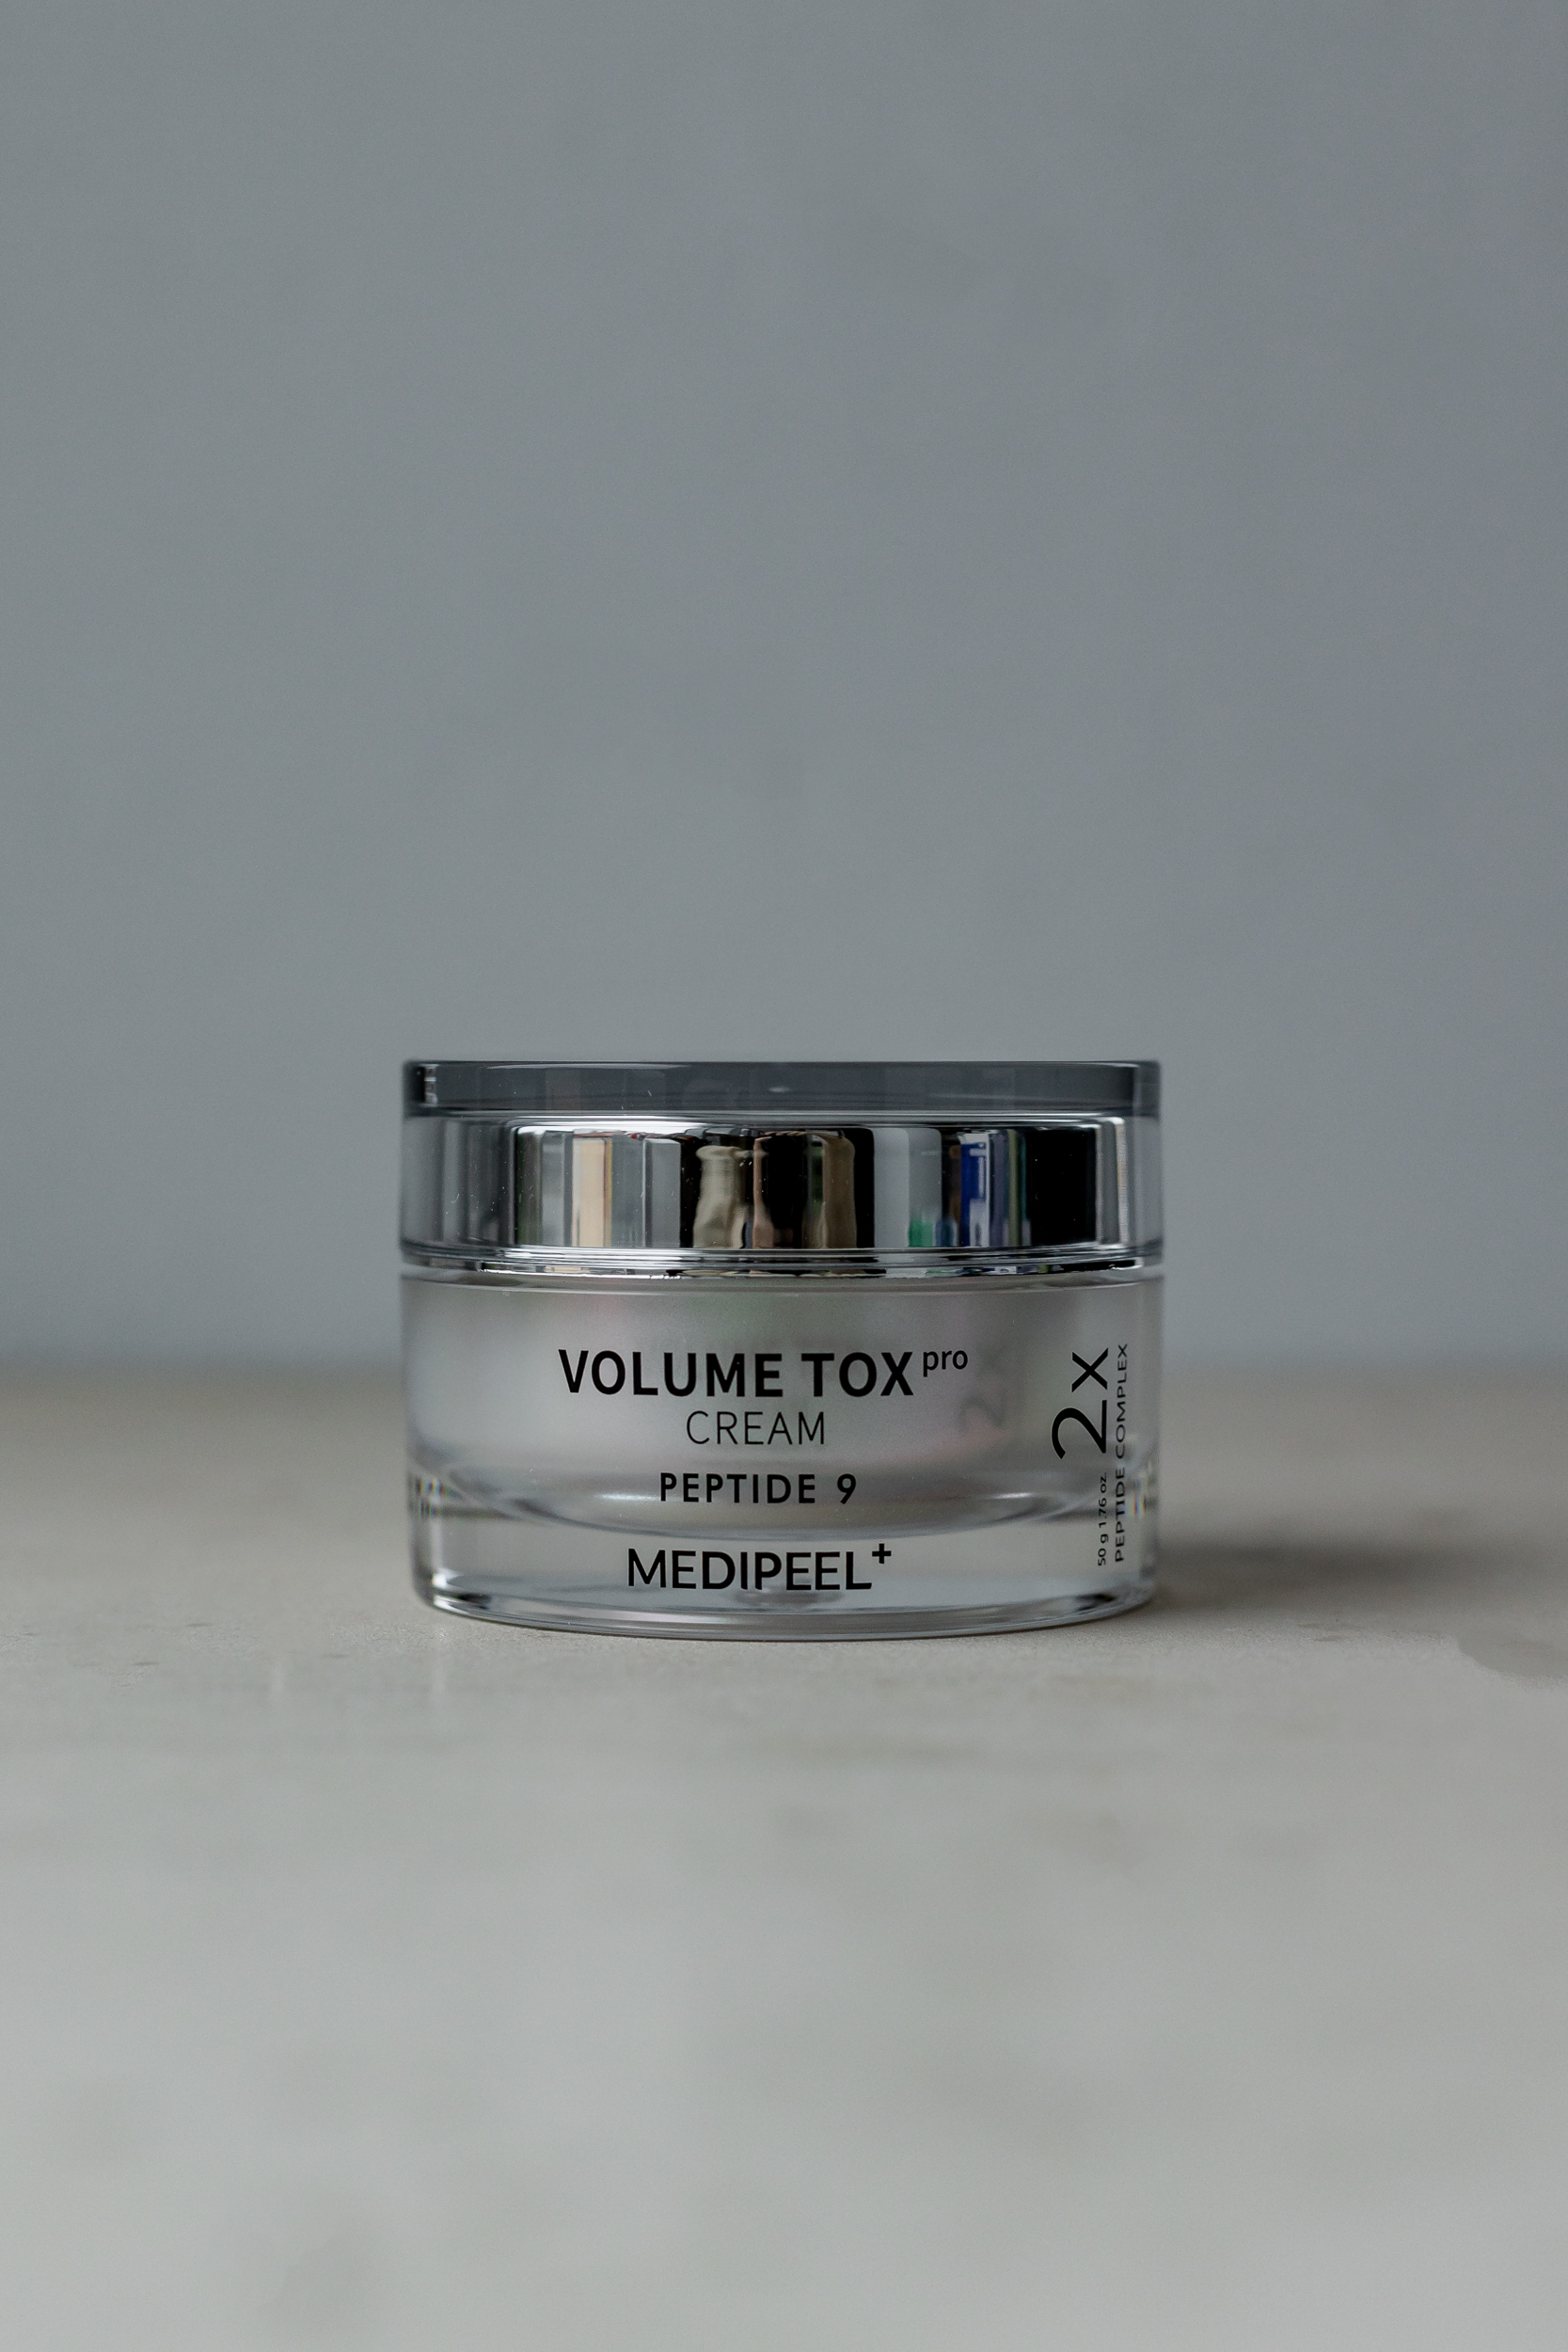 Омолаживающий крем для упругости кожи MEDI-PEEL Peptide 9 Volume Tox Cream PRO 50 g - фото 1